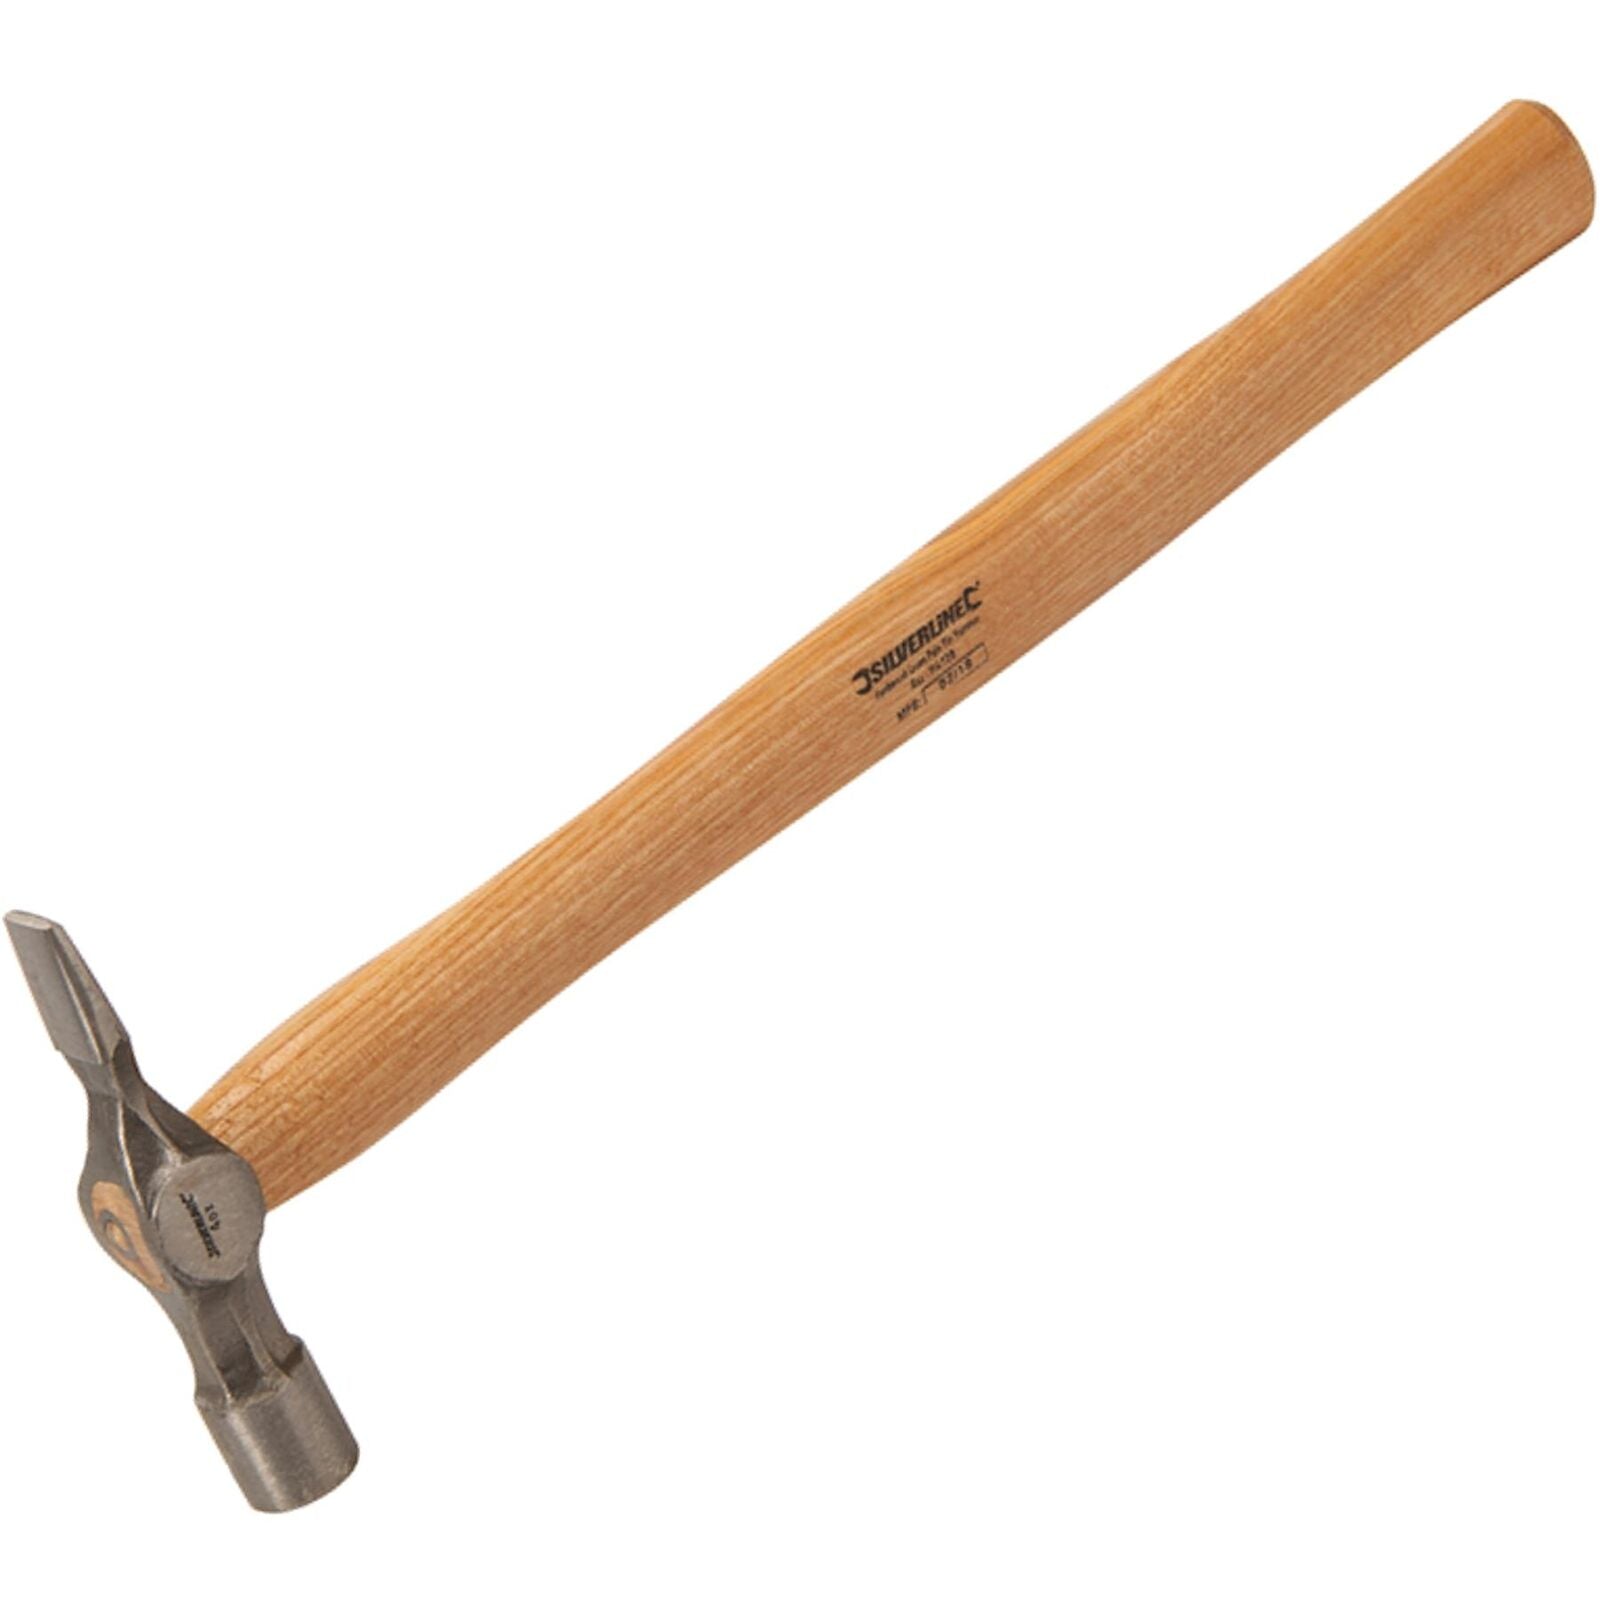 Silverline 4oz Ash Handle Pin Hammer Cross Pein Tack Small Lightweight